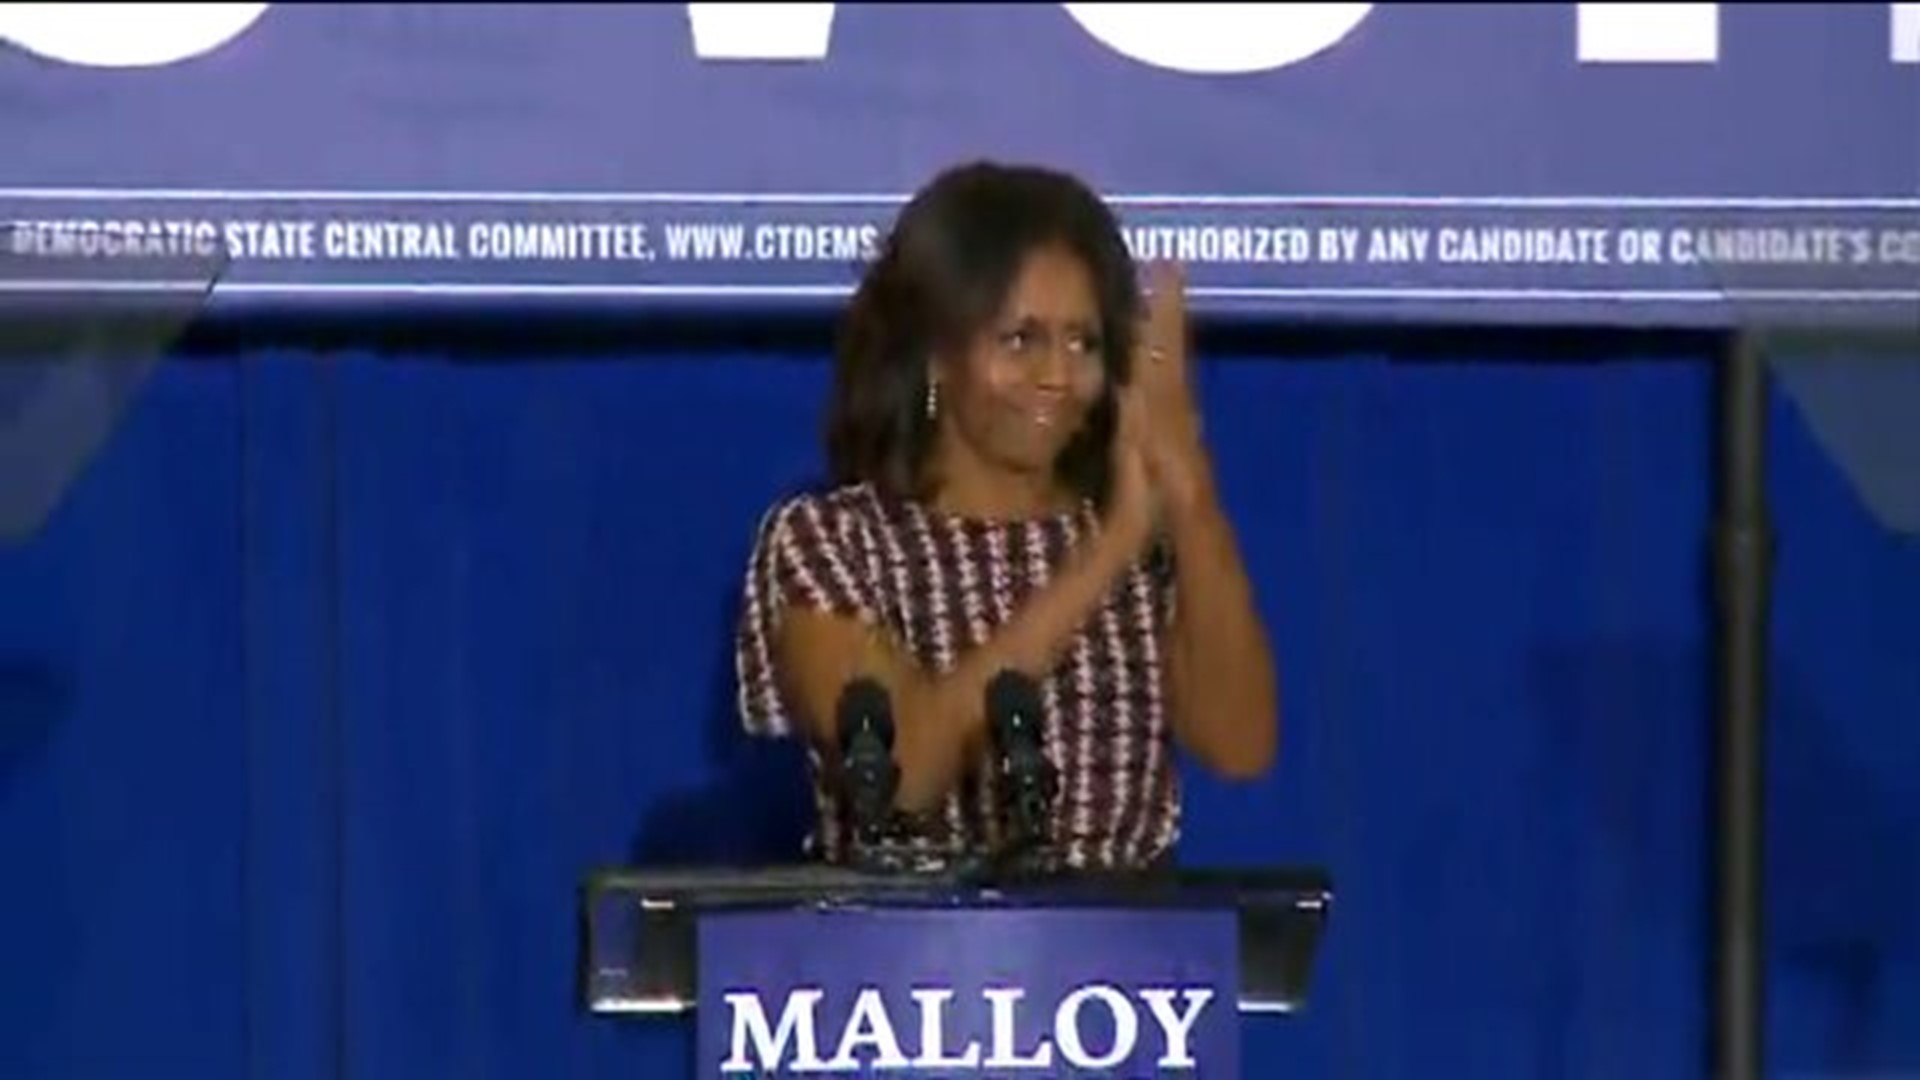 Michelle Obama stumps for Gov. Malloy